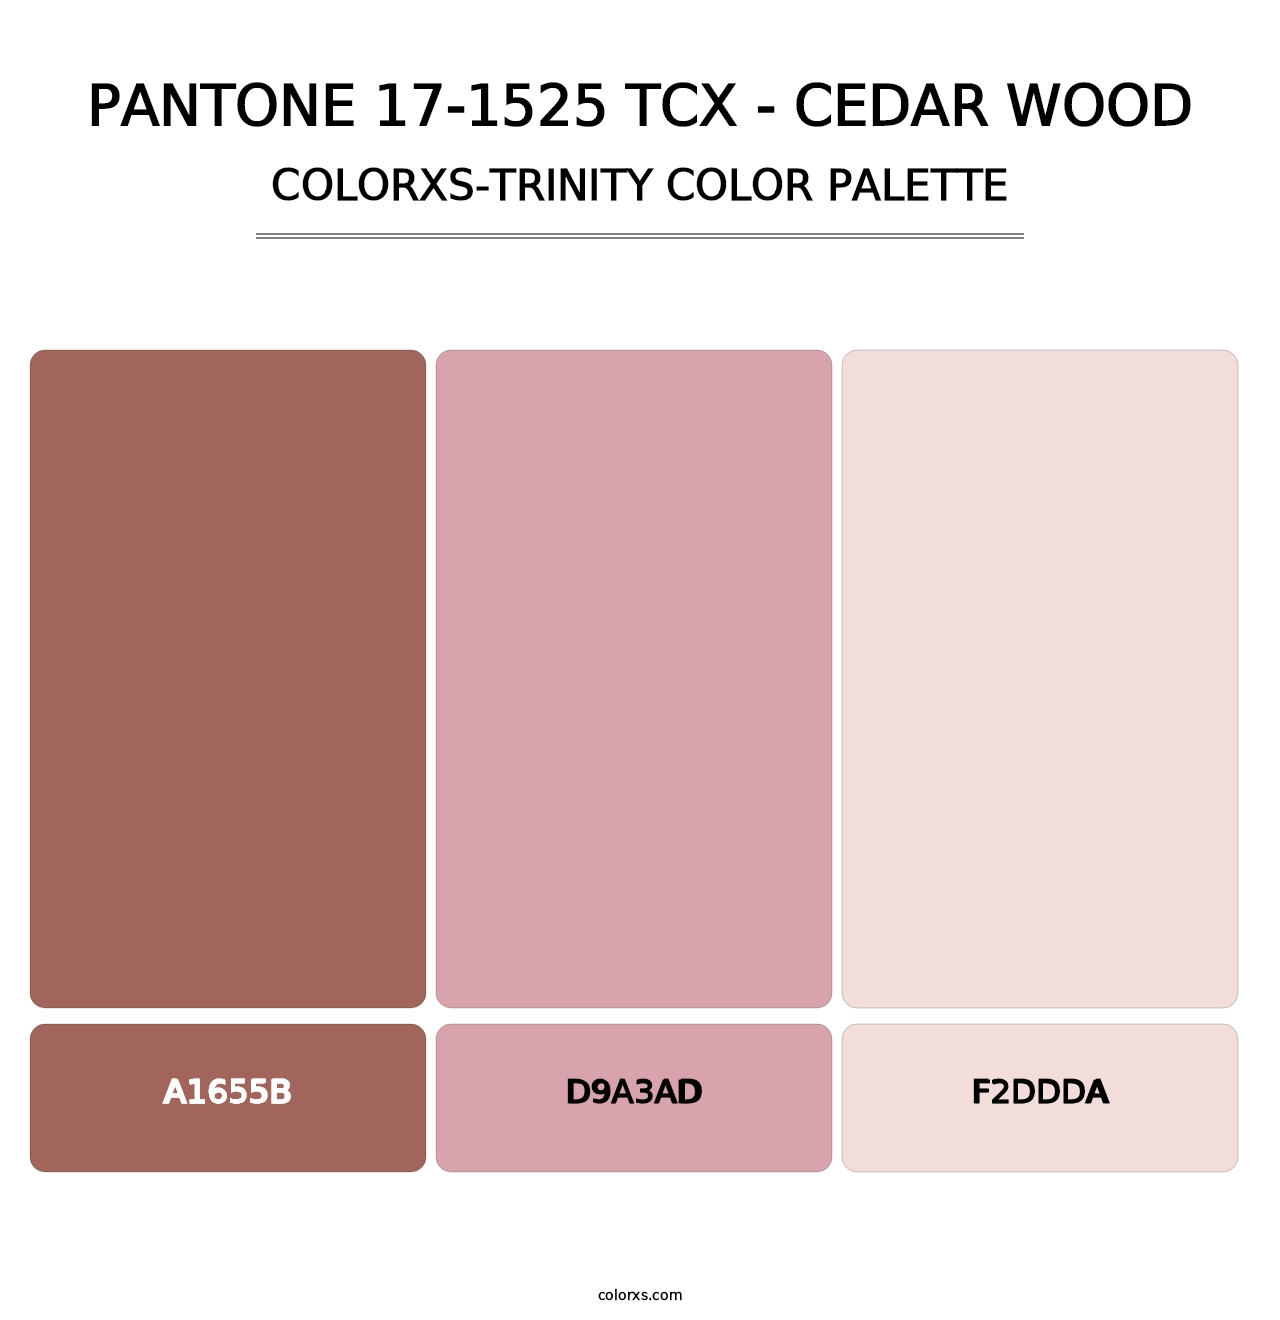 PANTONE 17-1525 TCX - Cedar Wood - Colorxs Trinity Palette